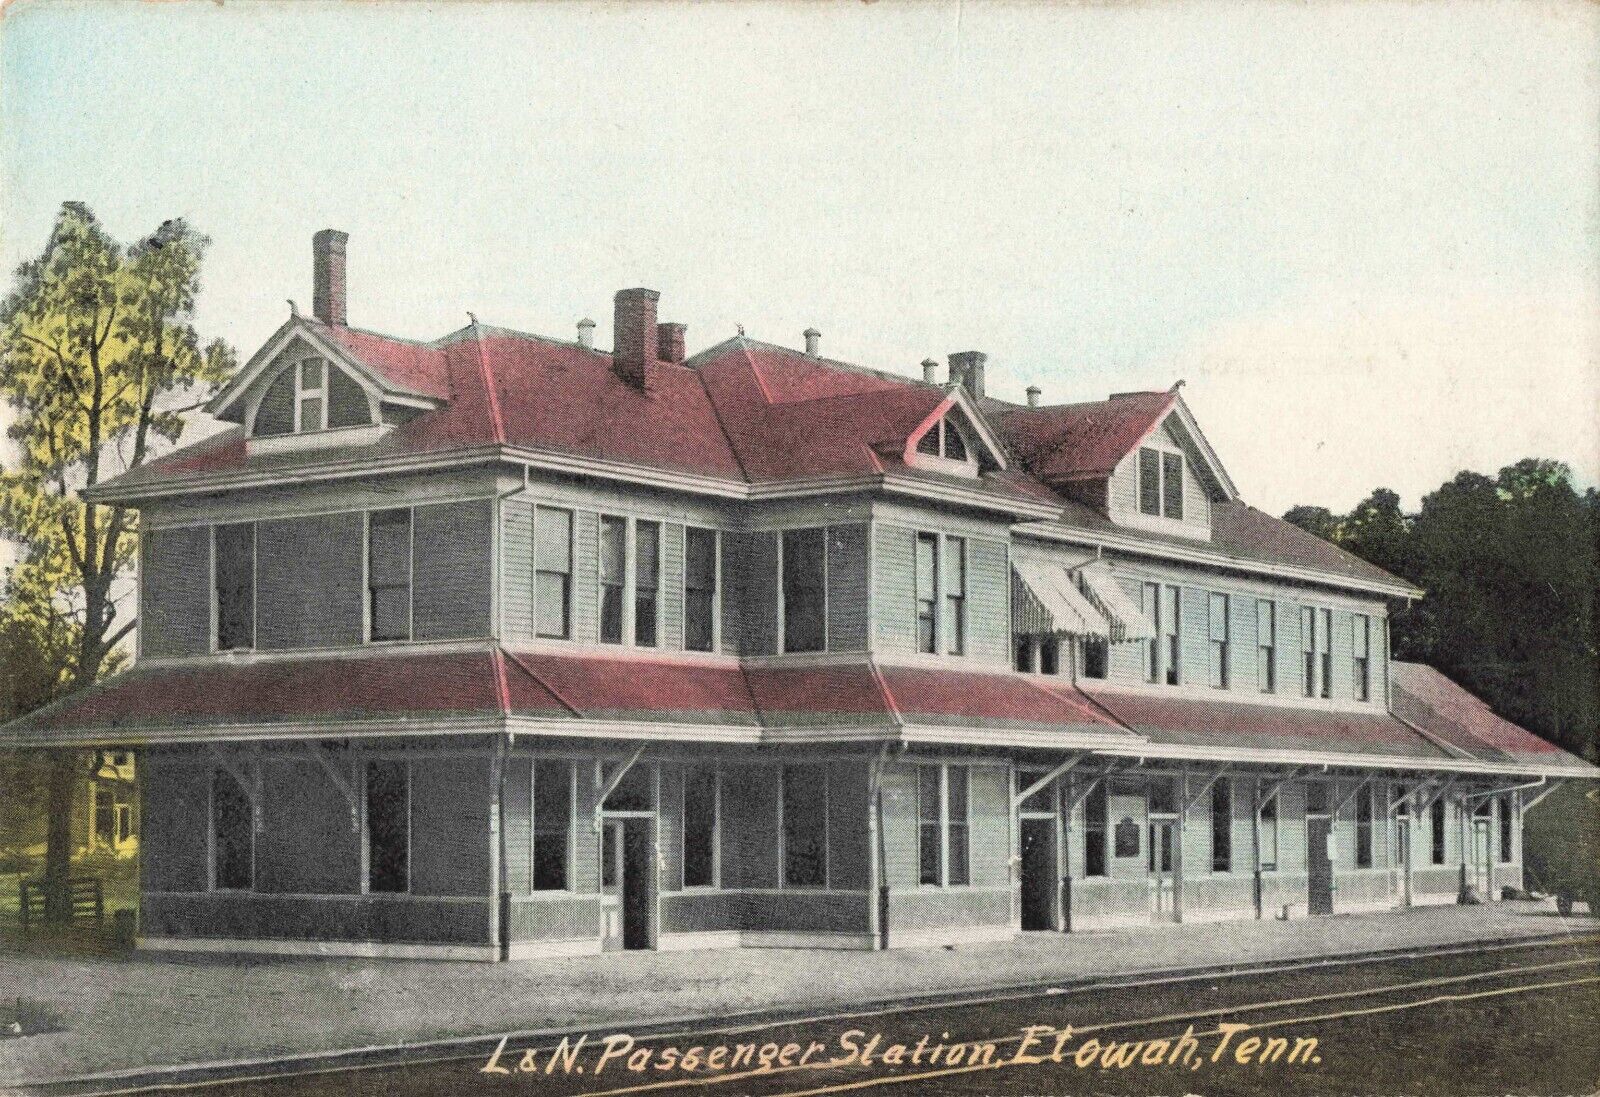 L & N Passenger Station Etowah Tennessee TN Railroad Depot c1910 Postcard